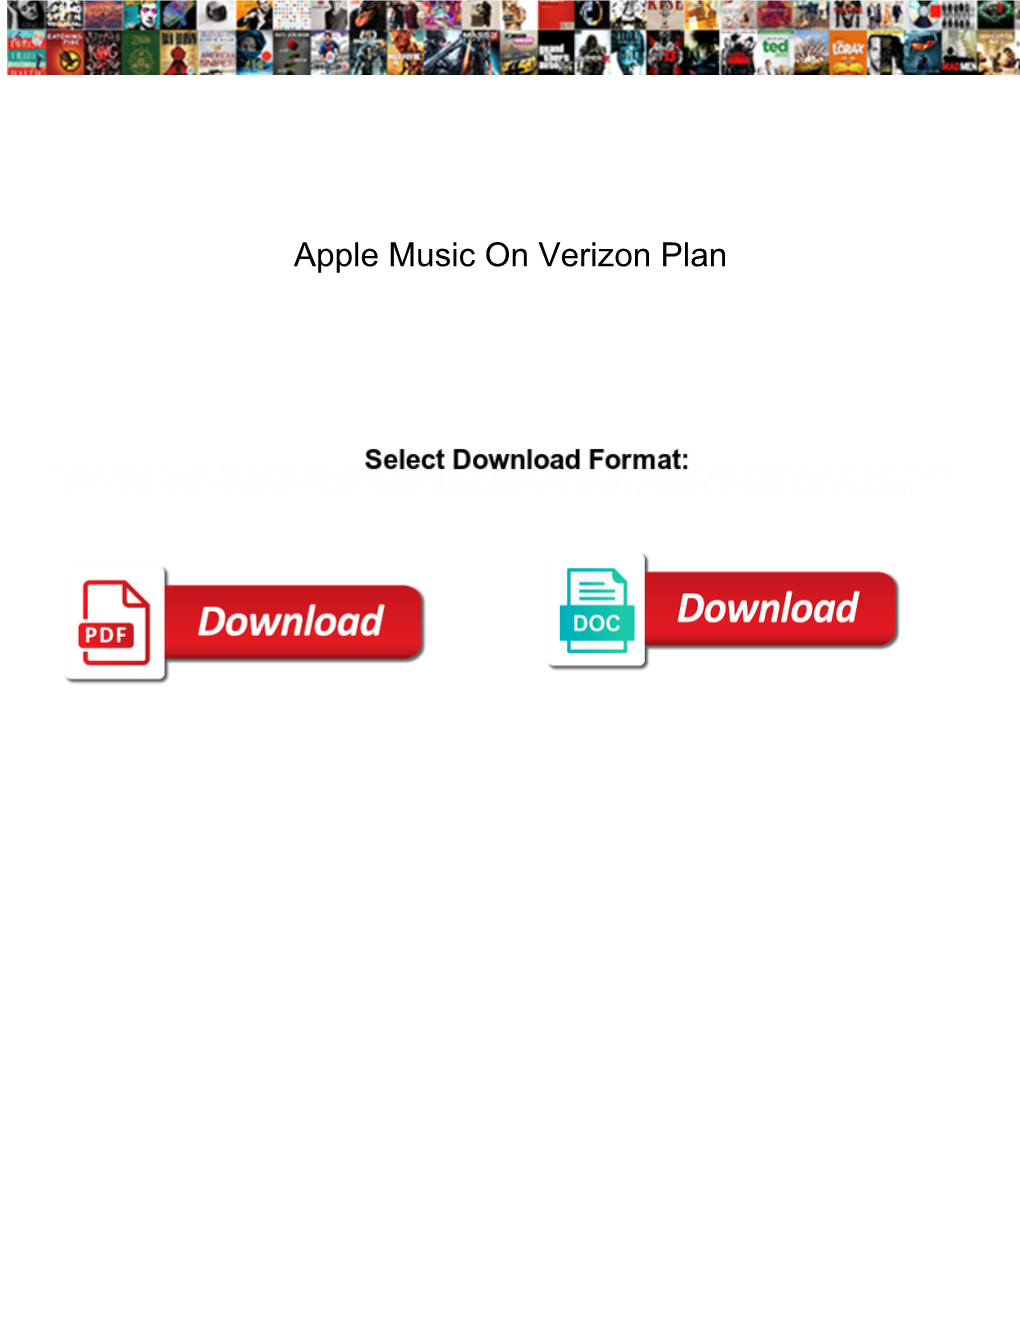 Apple Music on Verizon Plan